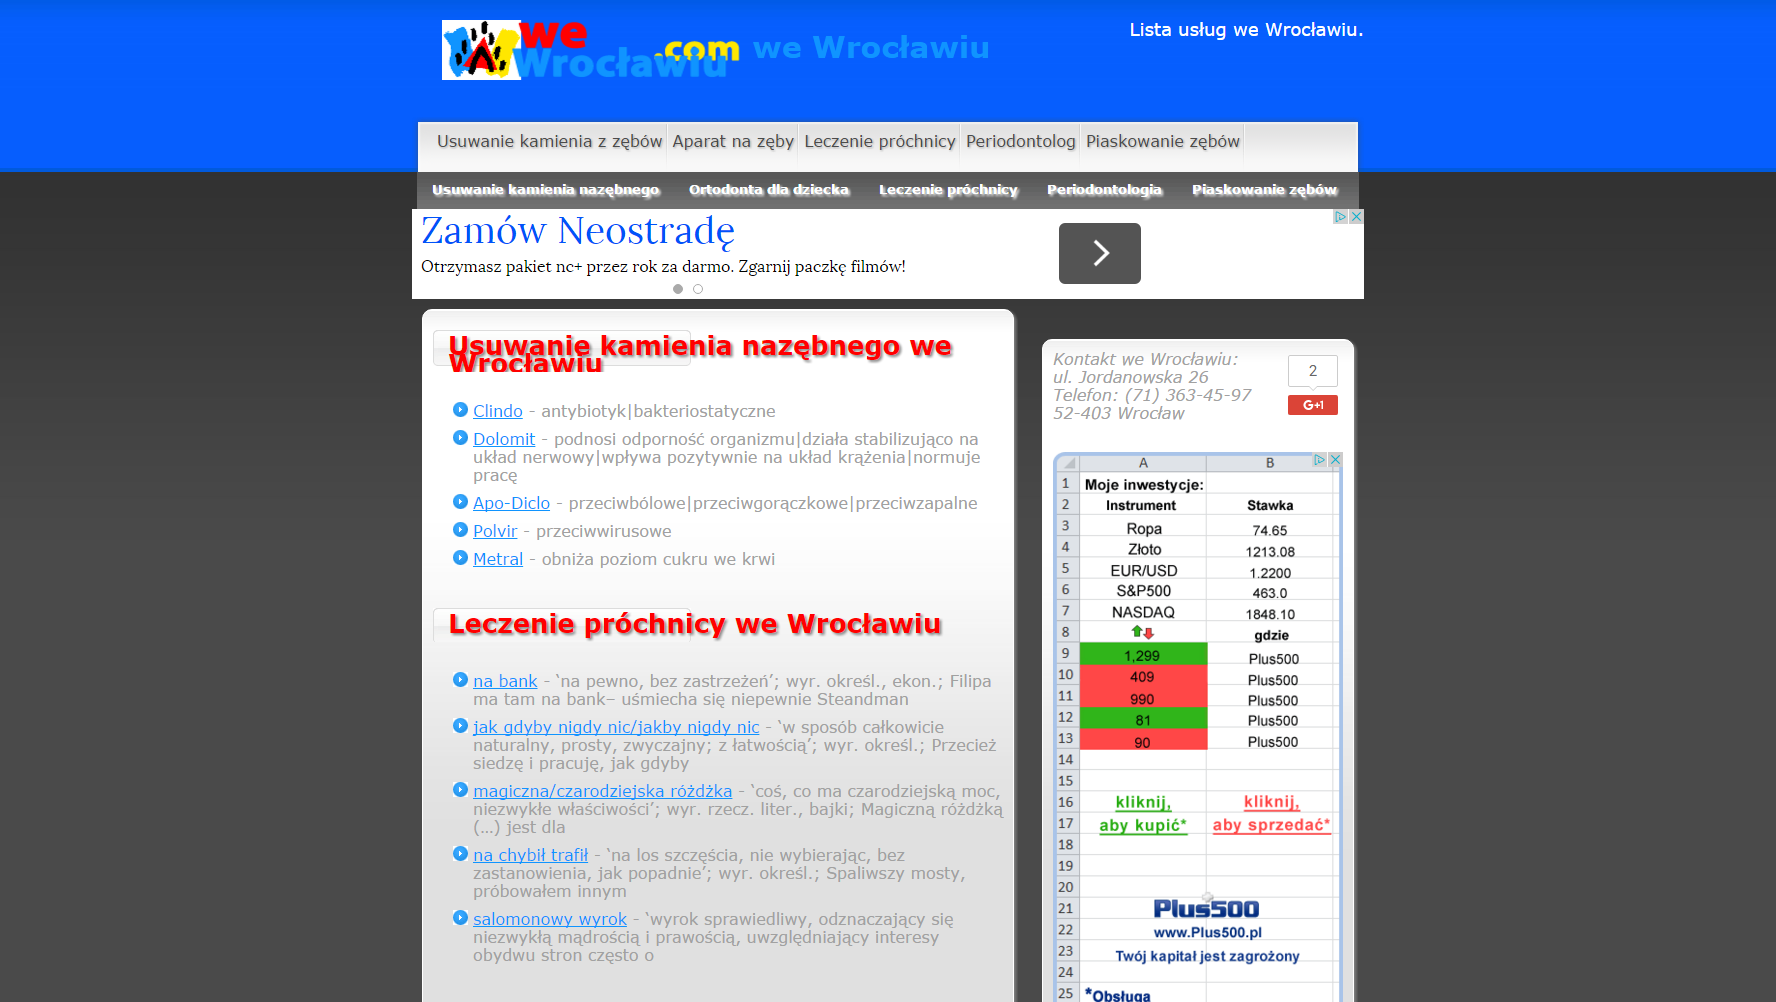 Projekt We-Wrocławiu.com